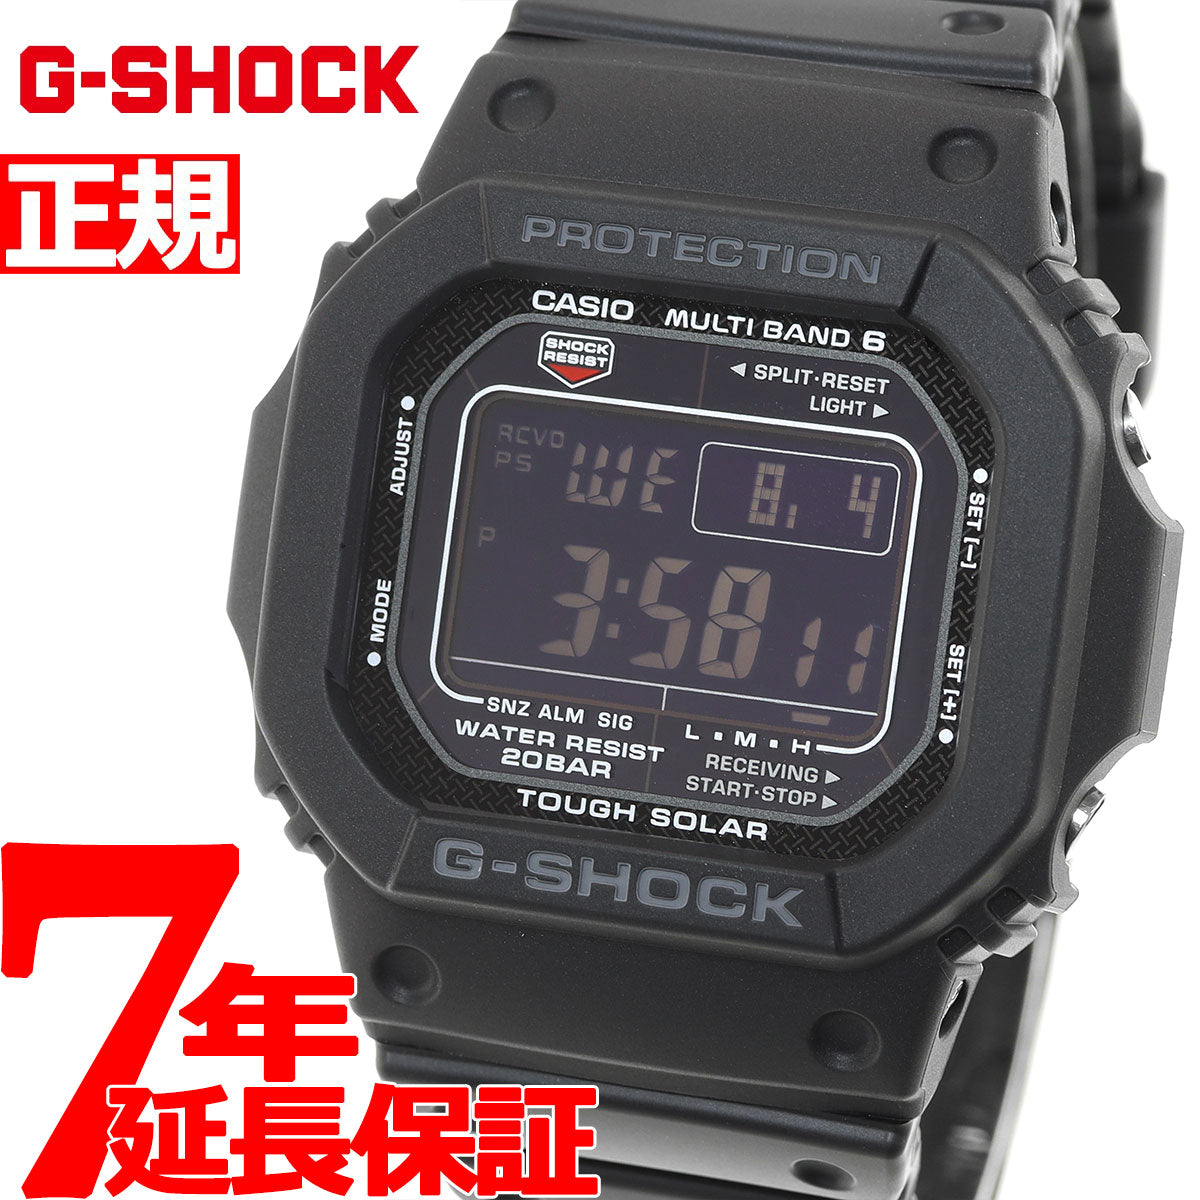 G-SHOCK G-SHOCK/(M)GW-M5610U-1JF/カシオ ブリッジ アクセサリー・腕時計 腕時計 ブラック【送料無料】 メンズ腕時計